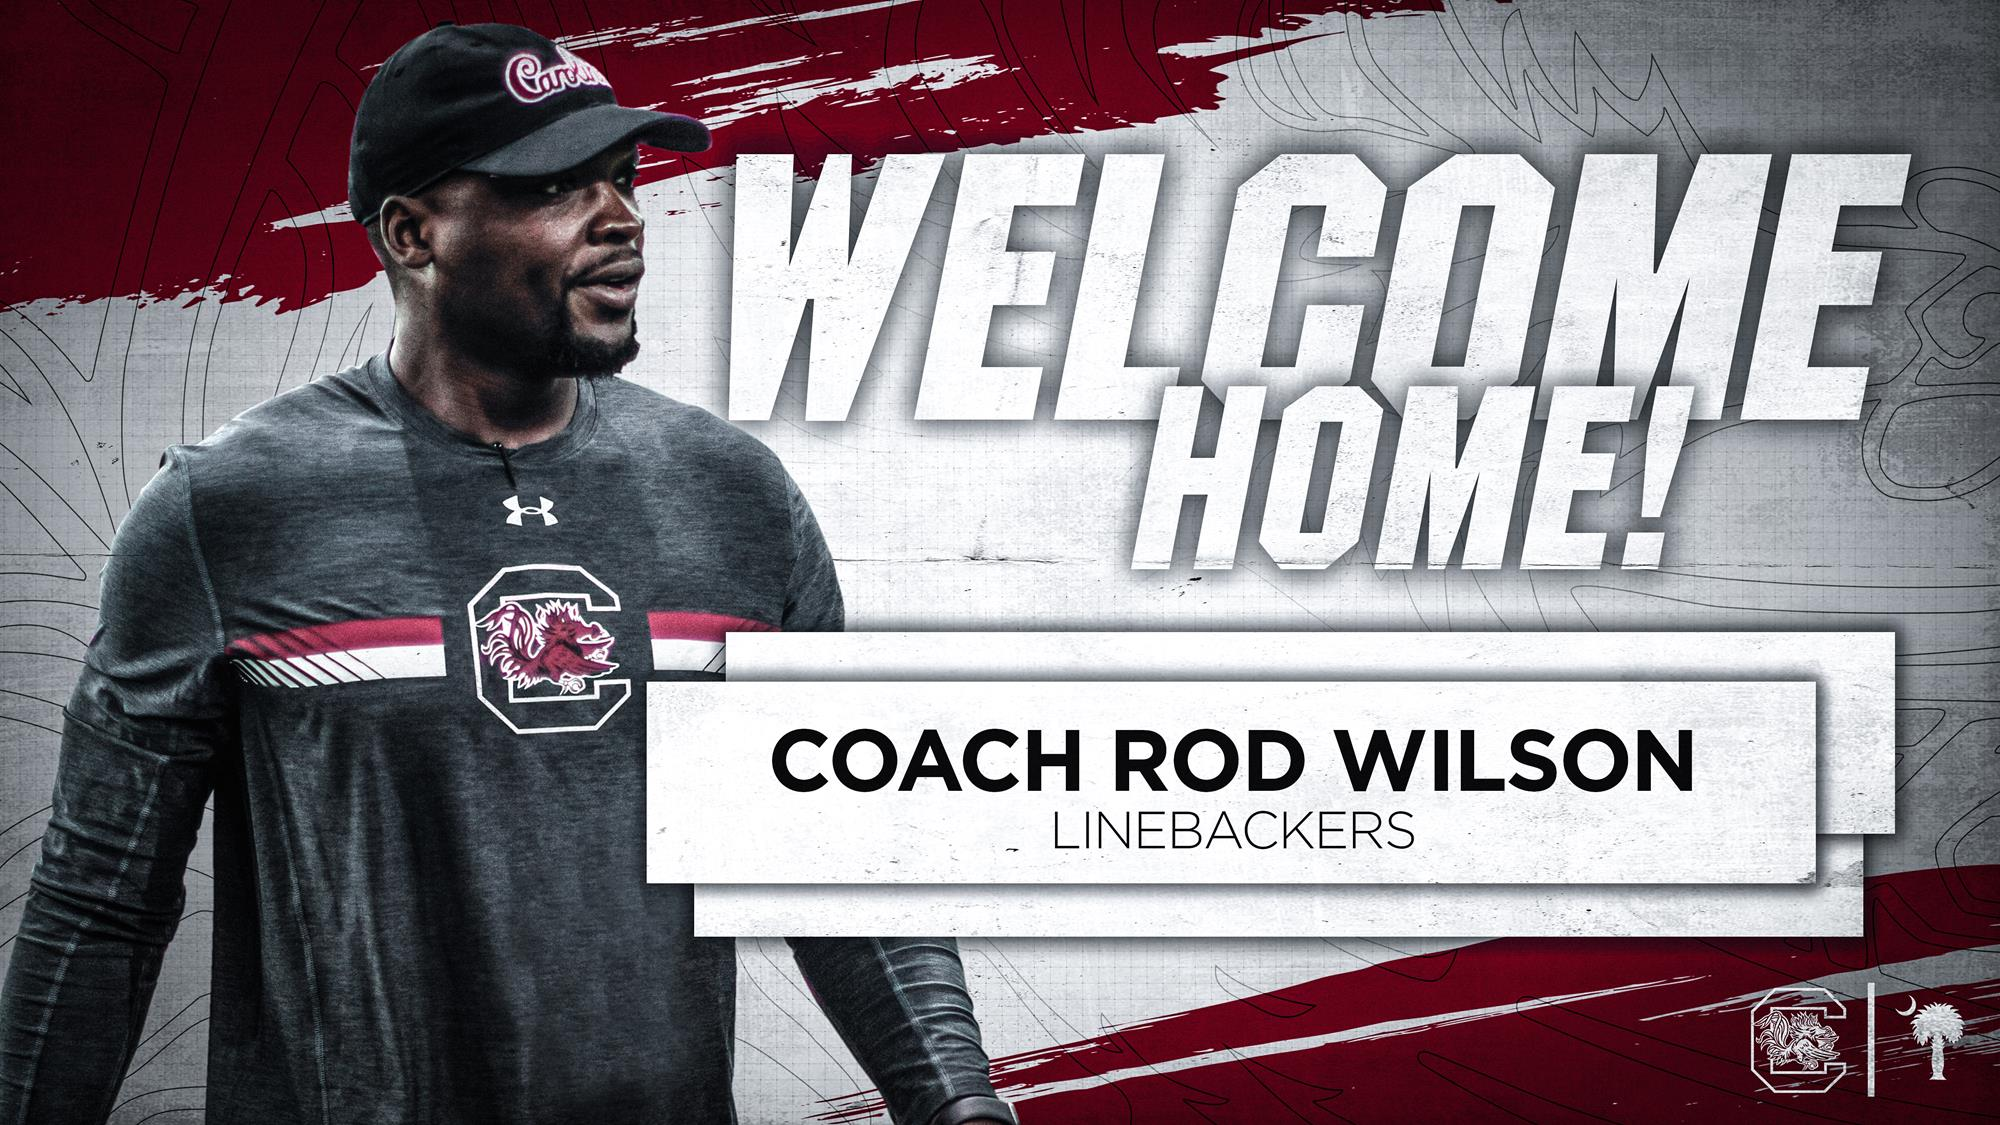 Rod Wilson Named Linebackers Coach